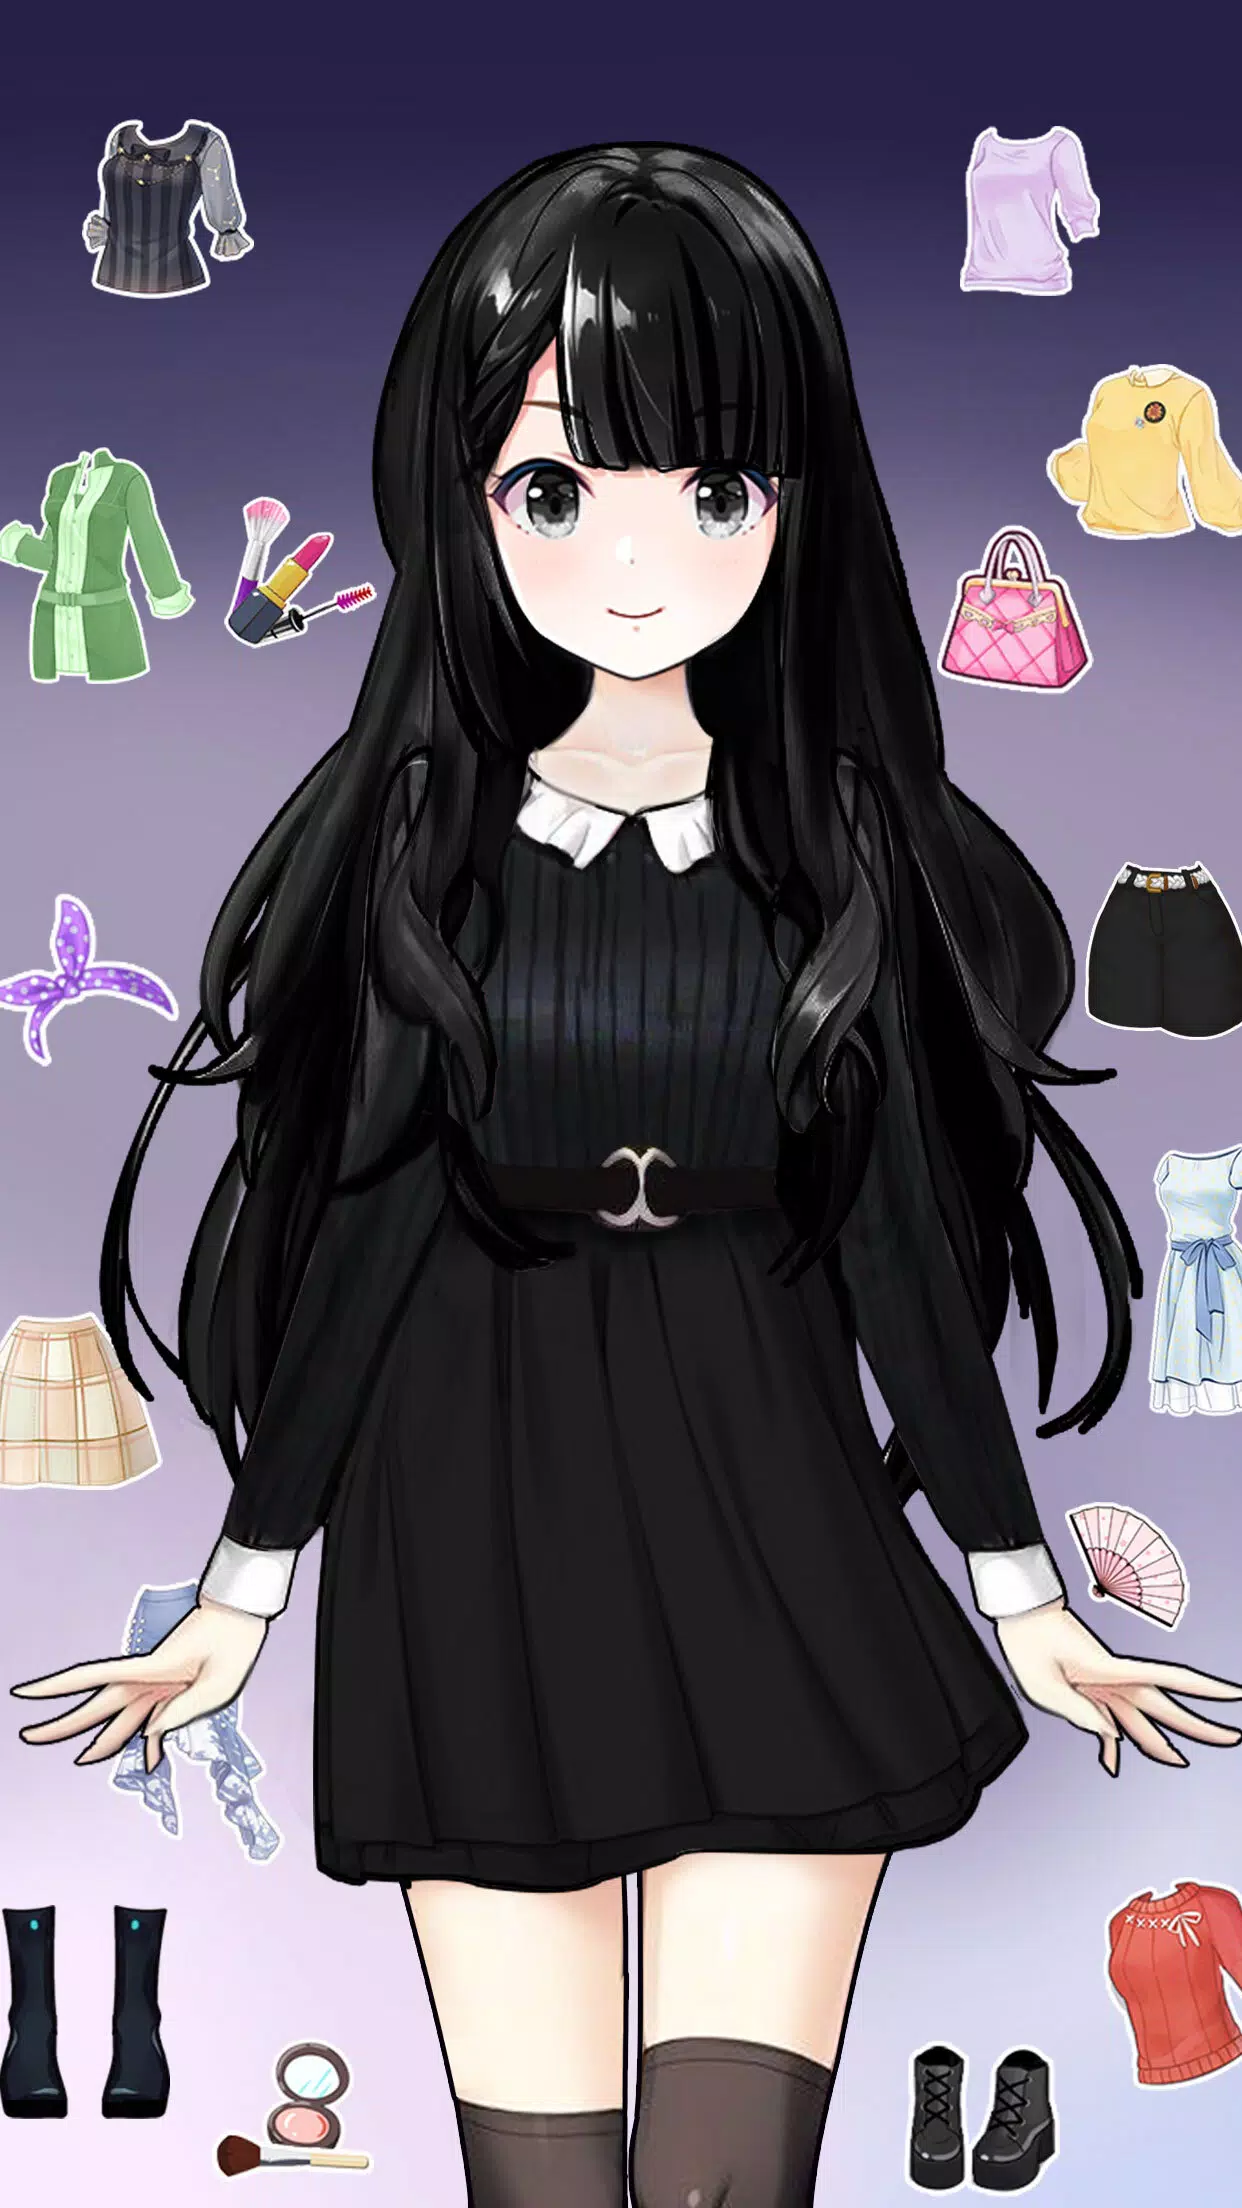 Descarga de APK de Juego de vestir d anime chicas para Android